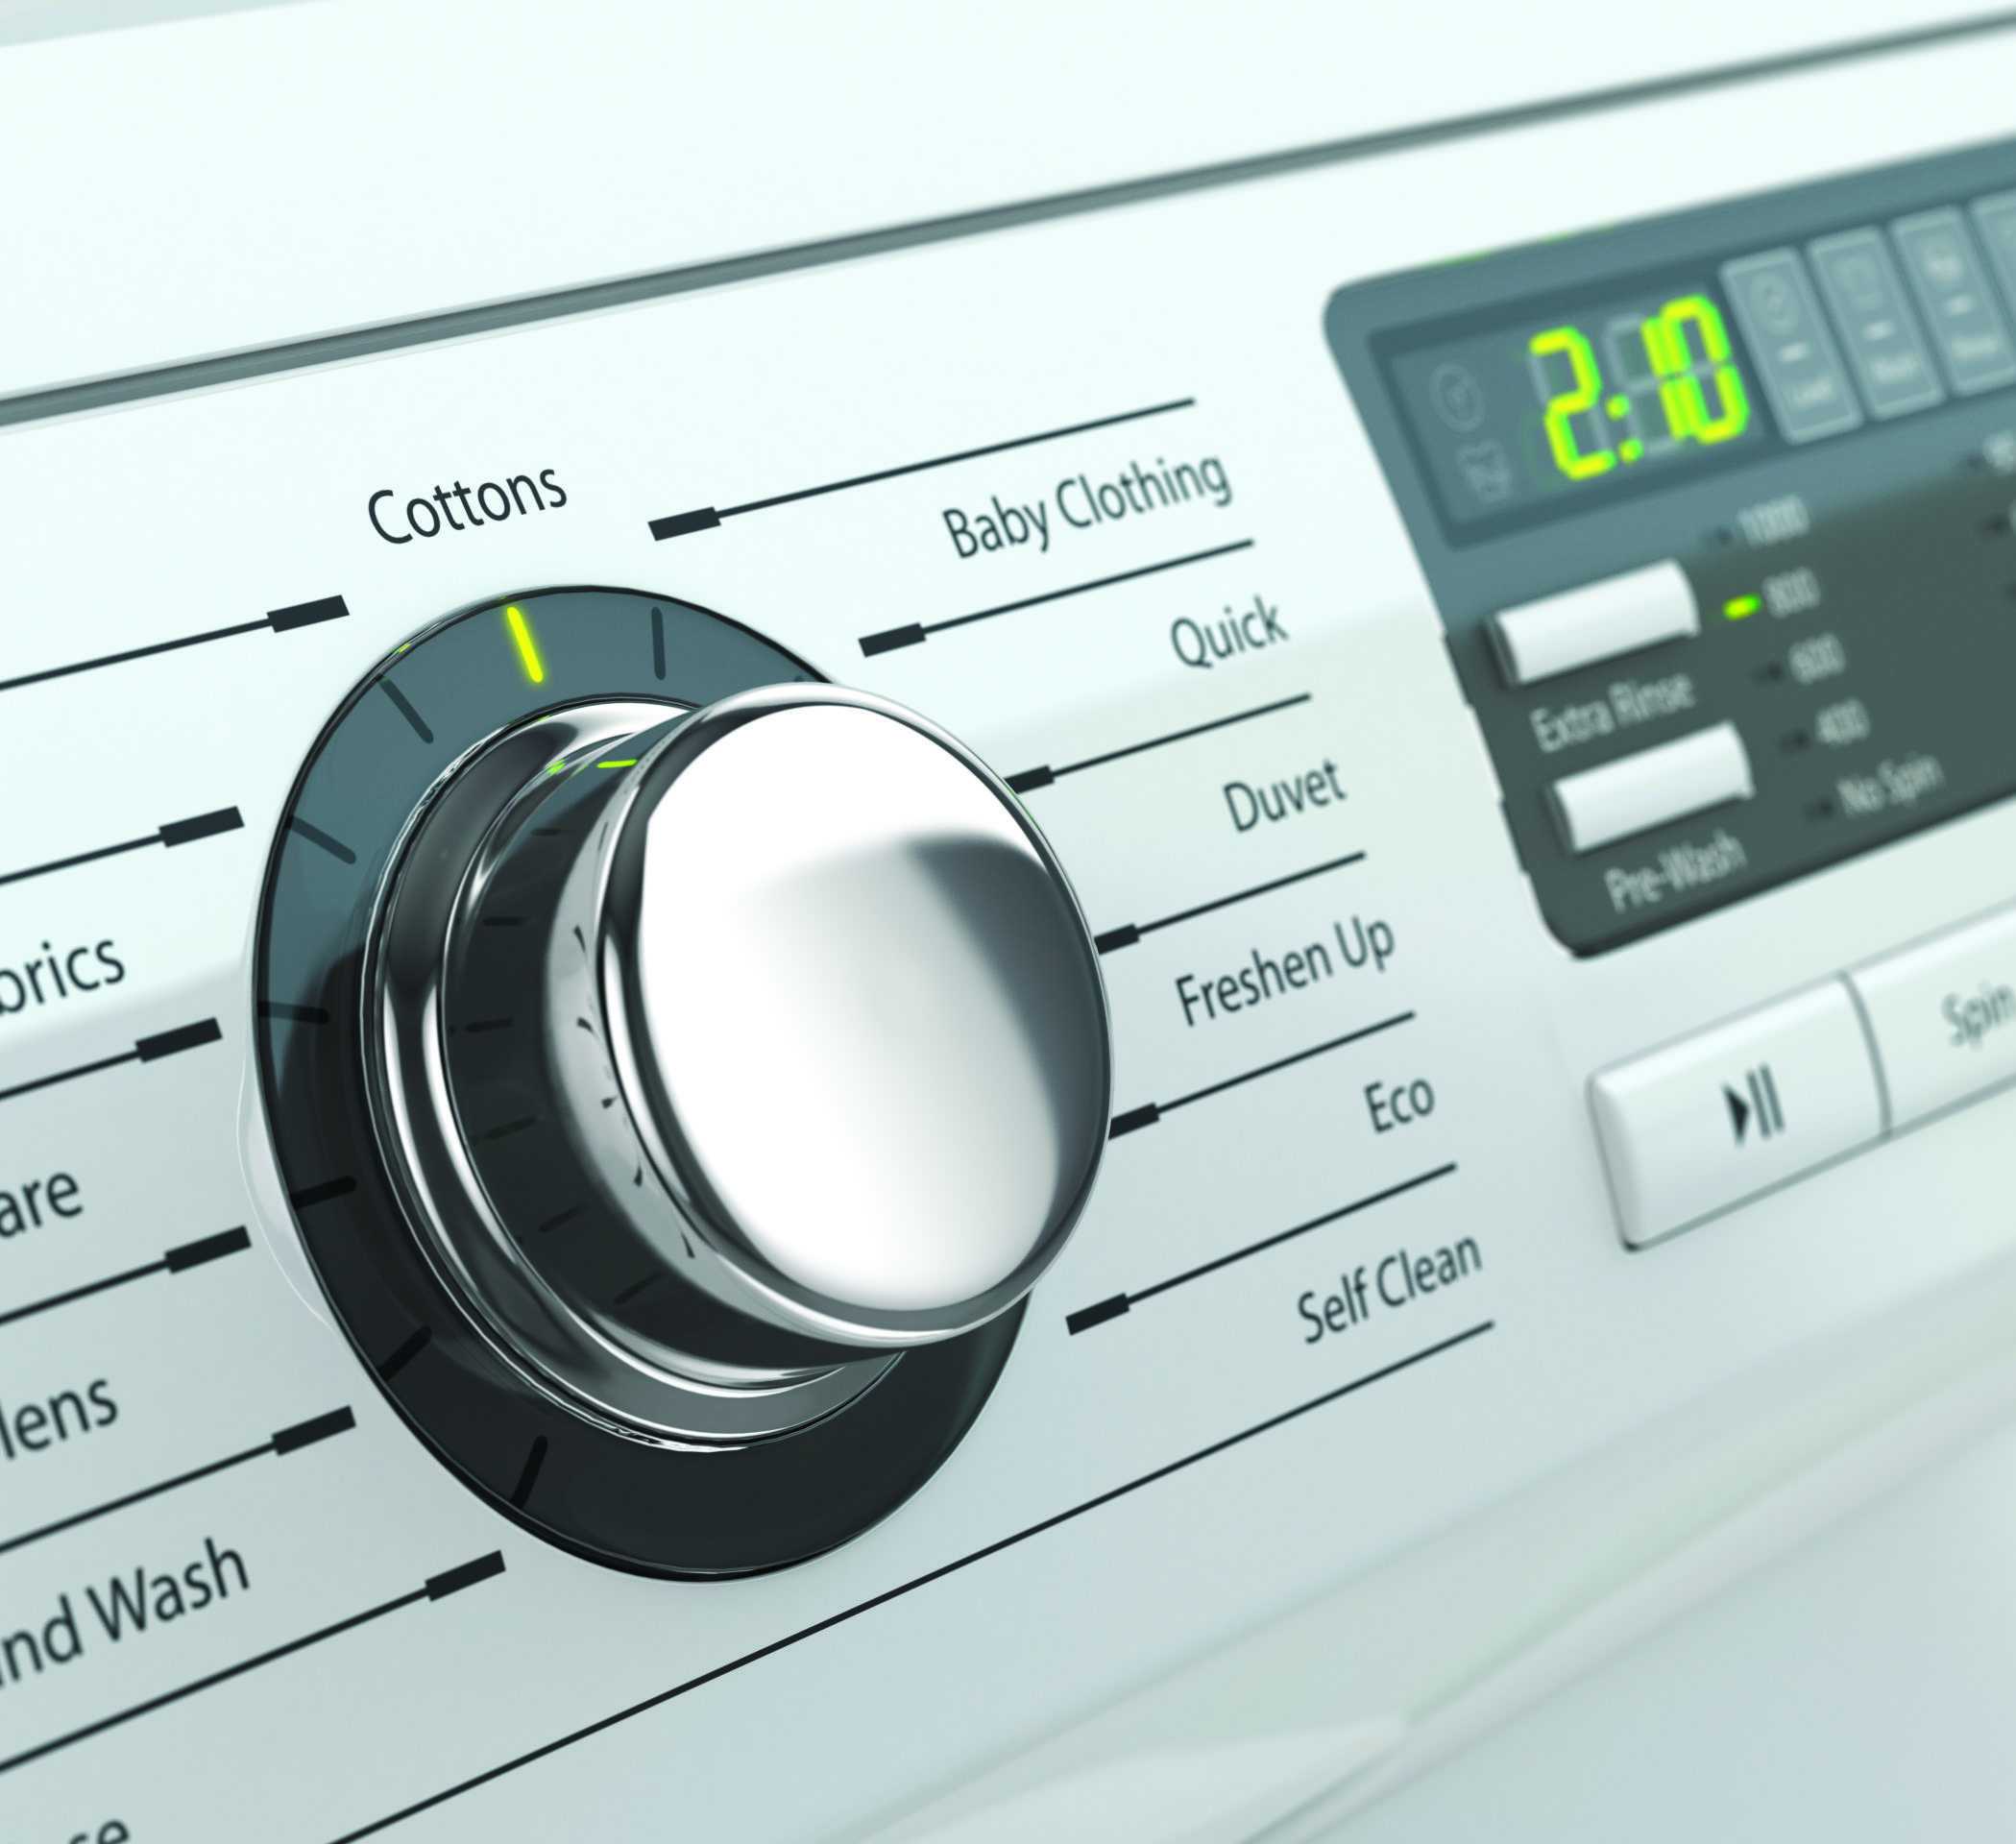 Control panel of washing machine